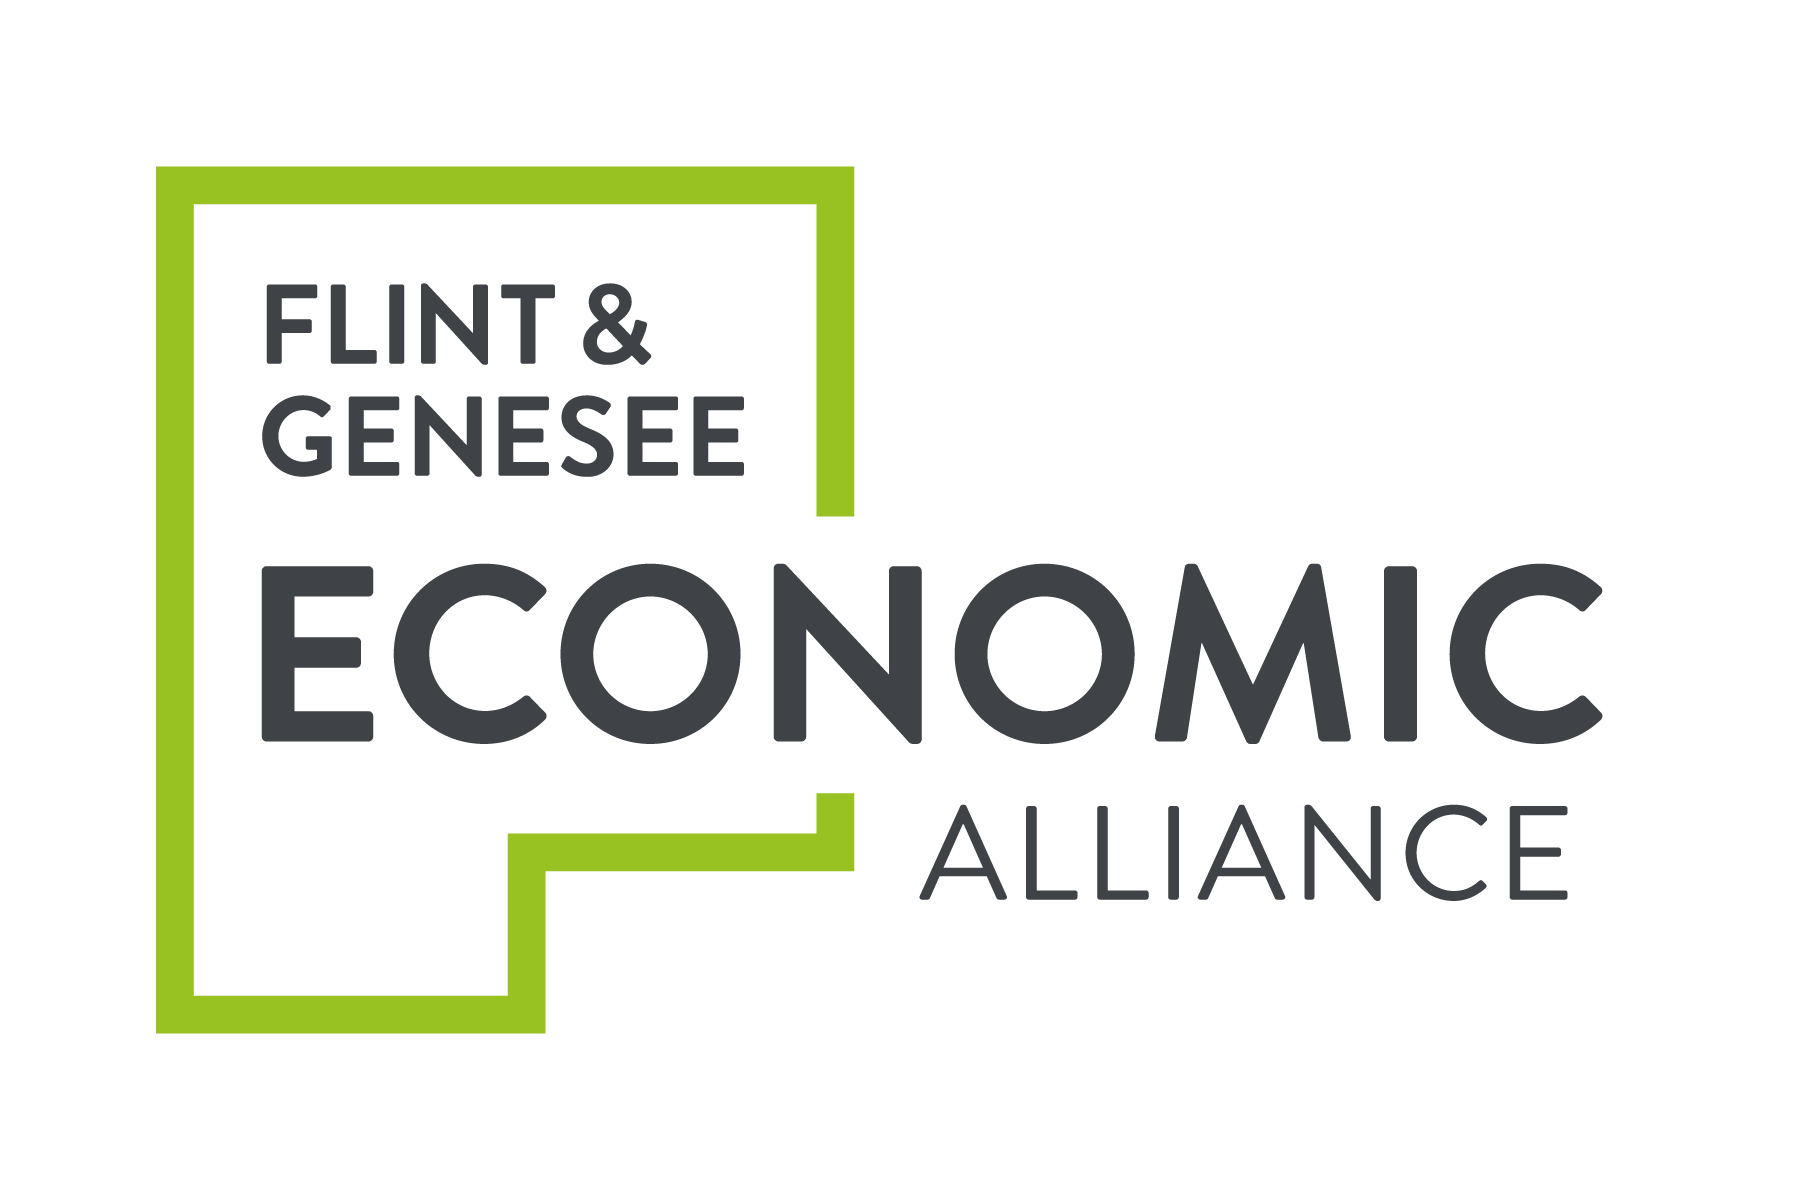 FlintGenesee Alliance